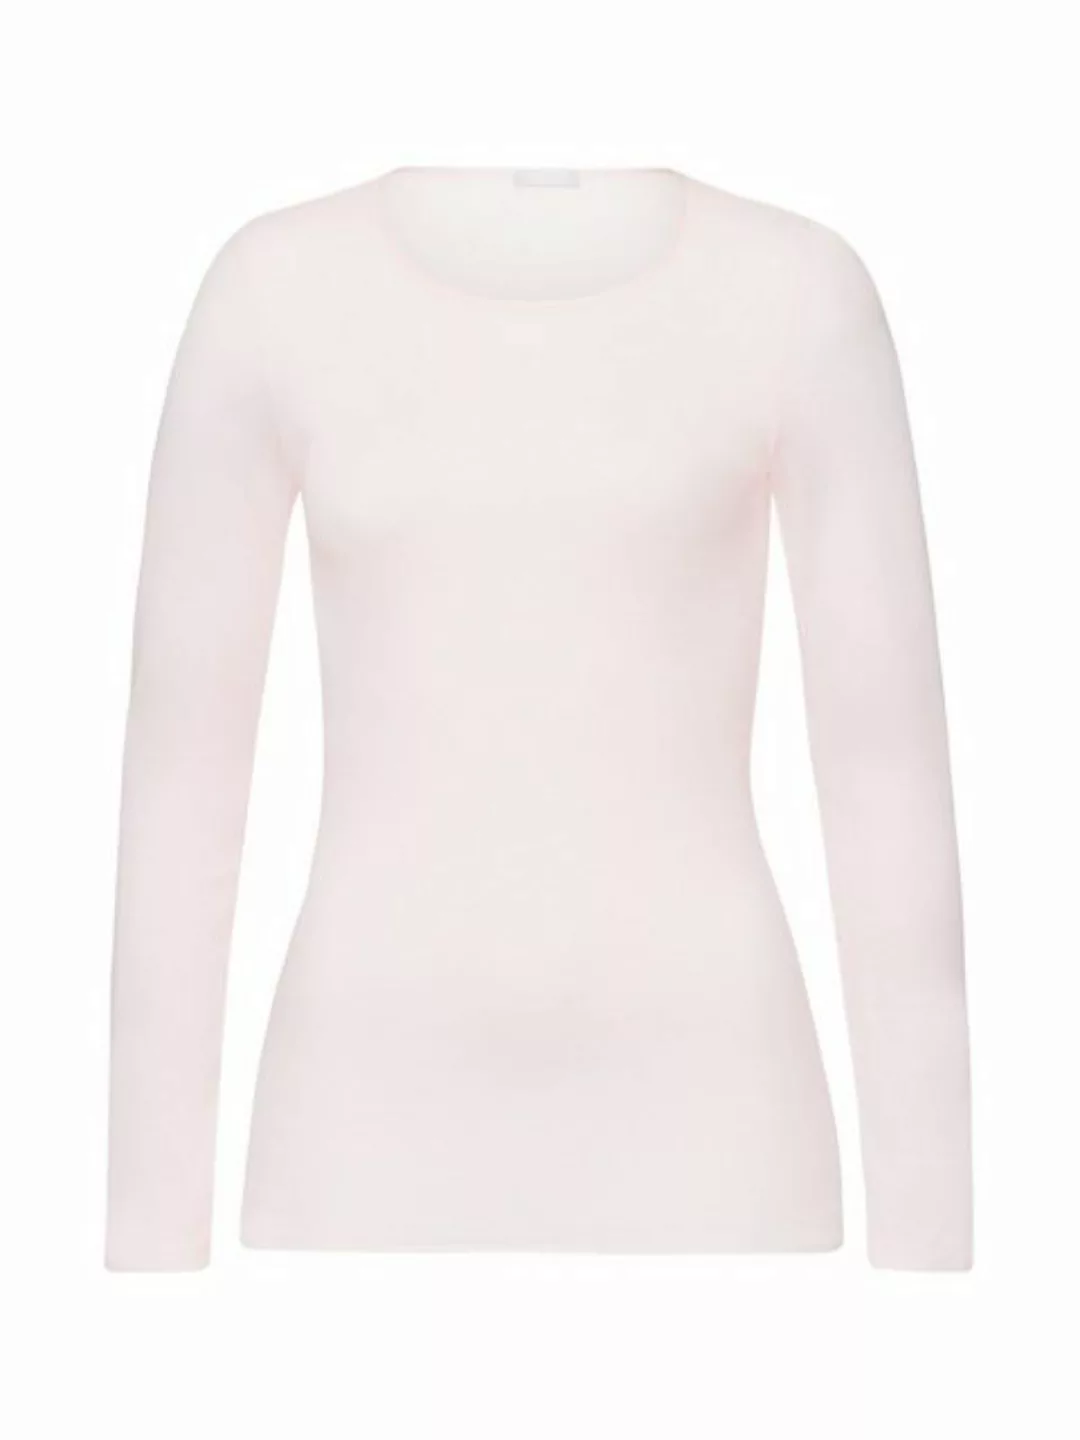 Hanro Longsleeve Cotton Seamless unterhemd unterzieh-shirt ärmellos günstig online kaufen